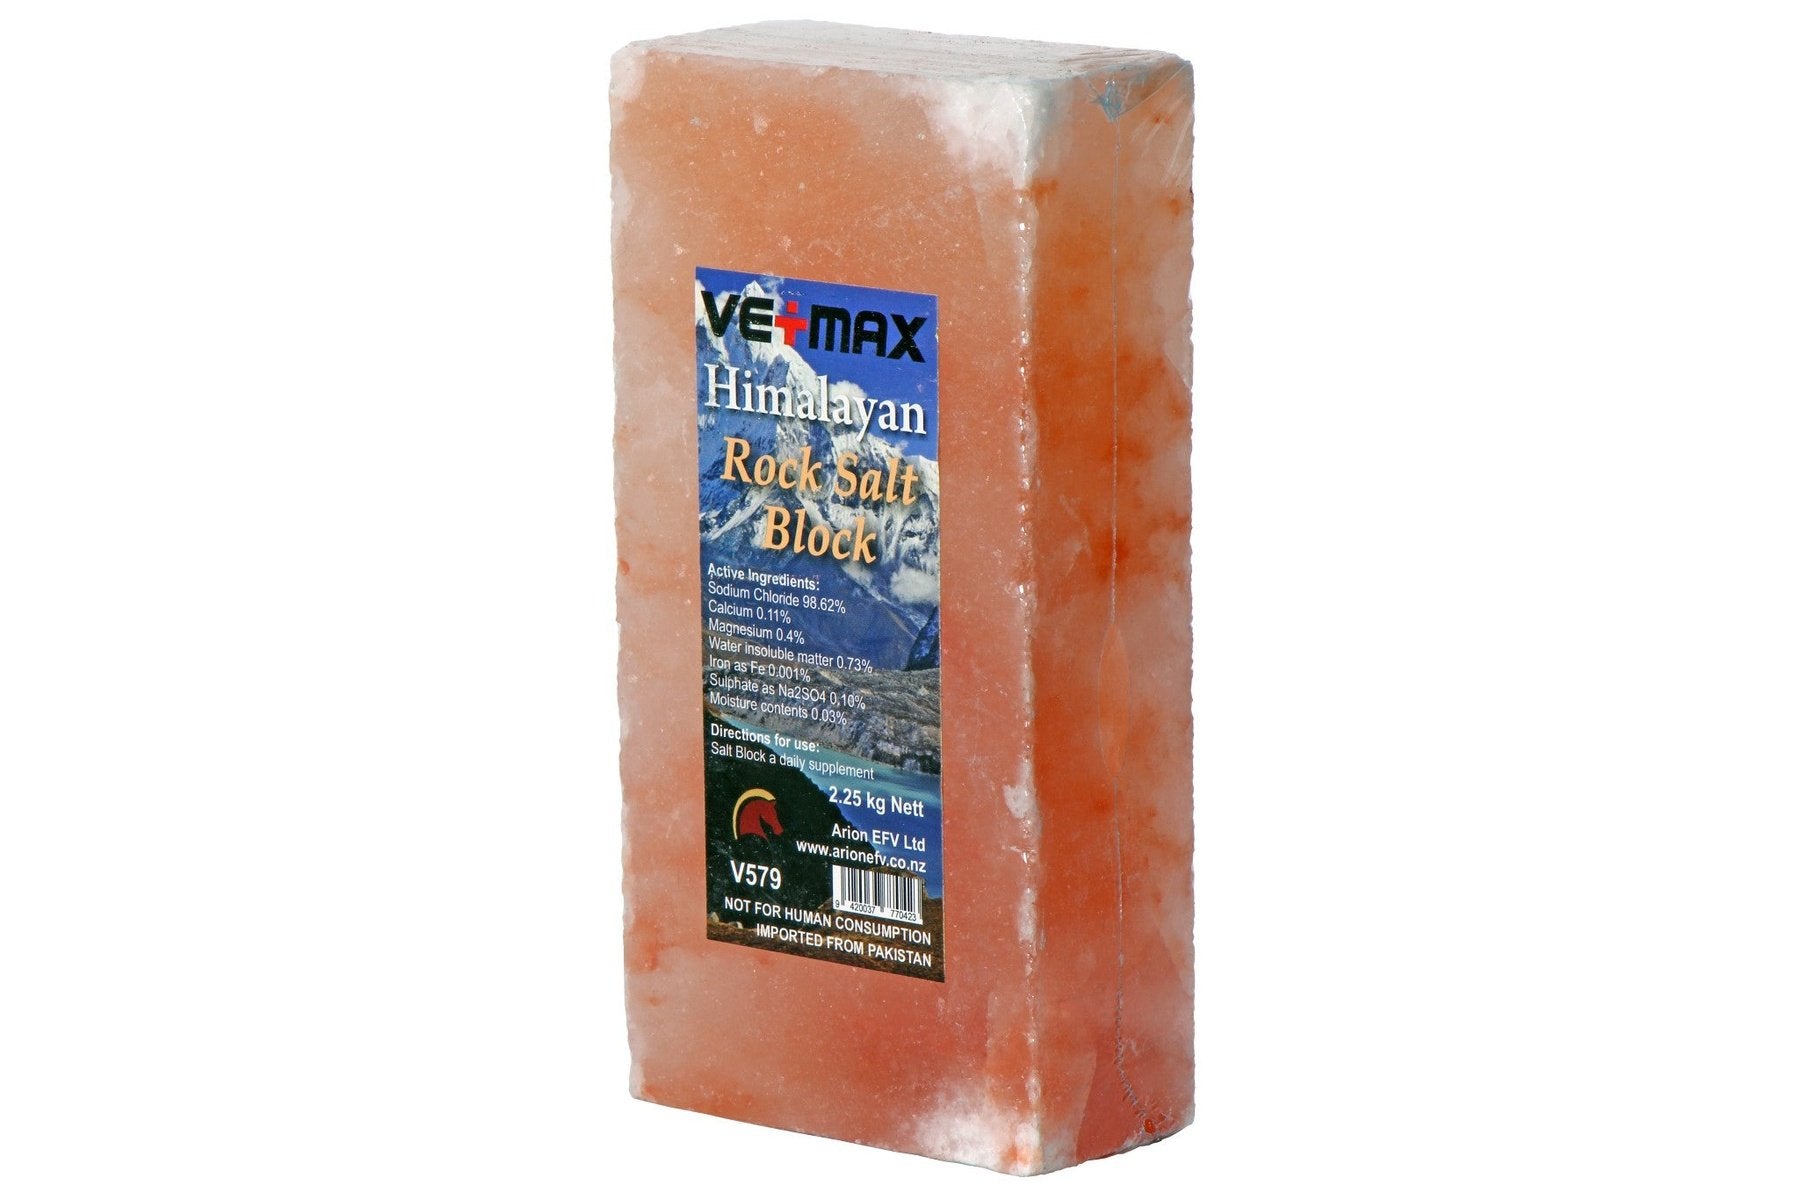 Vetmax Himalayan Rock Salt Block